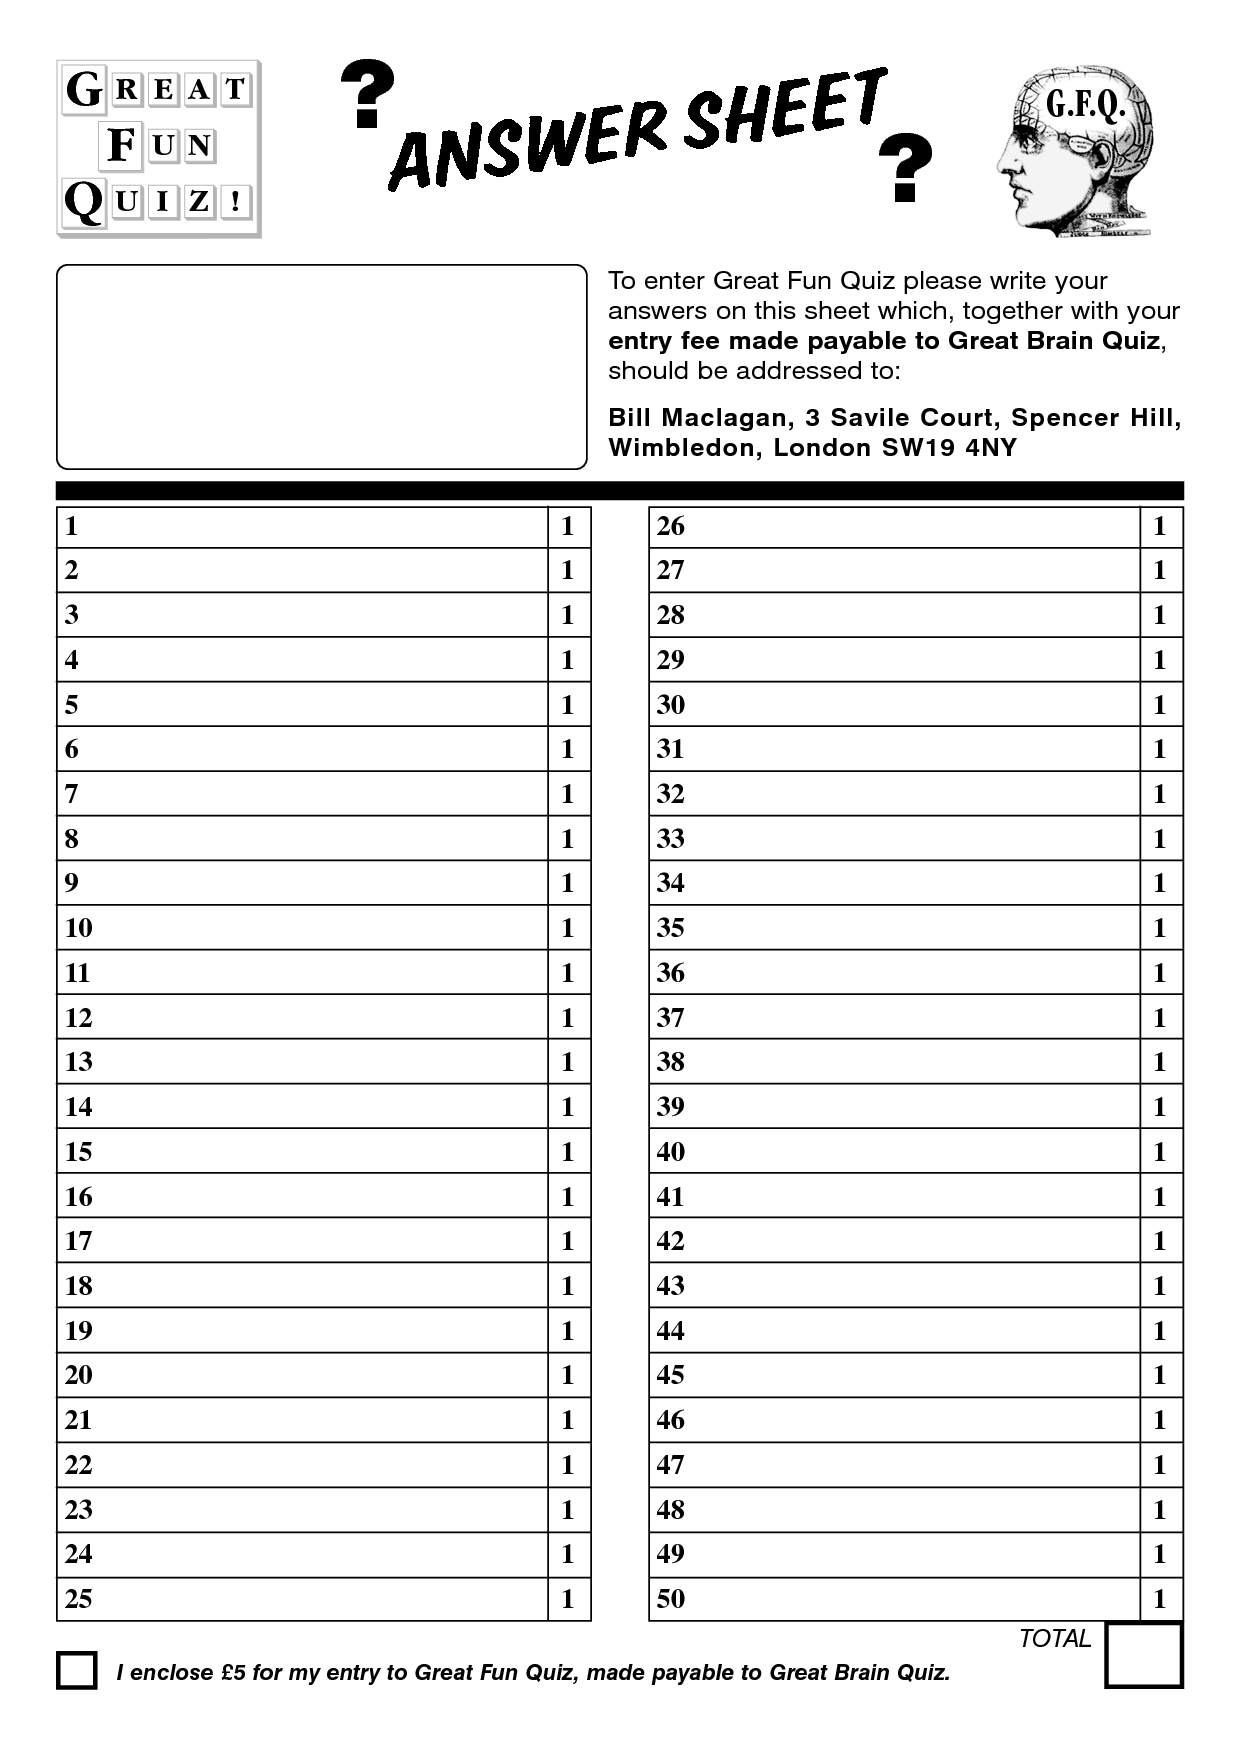 Blank Answer Sheet Template 1-50 from cdn.quotesgram.com